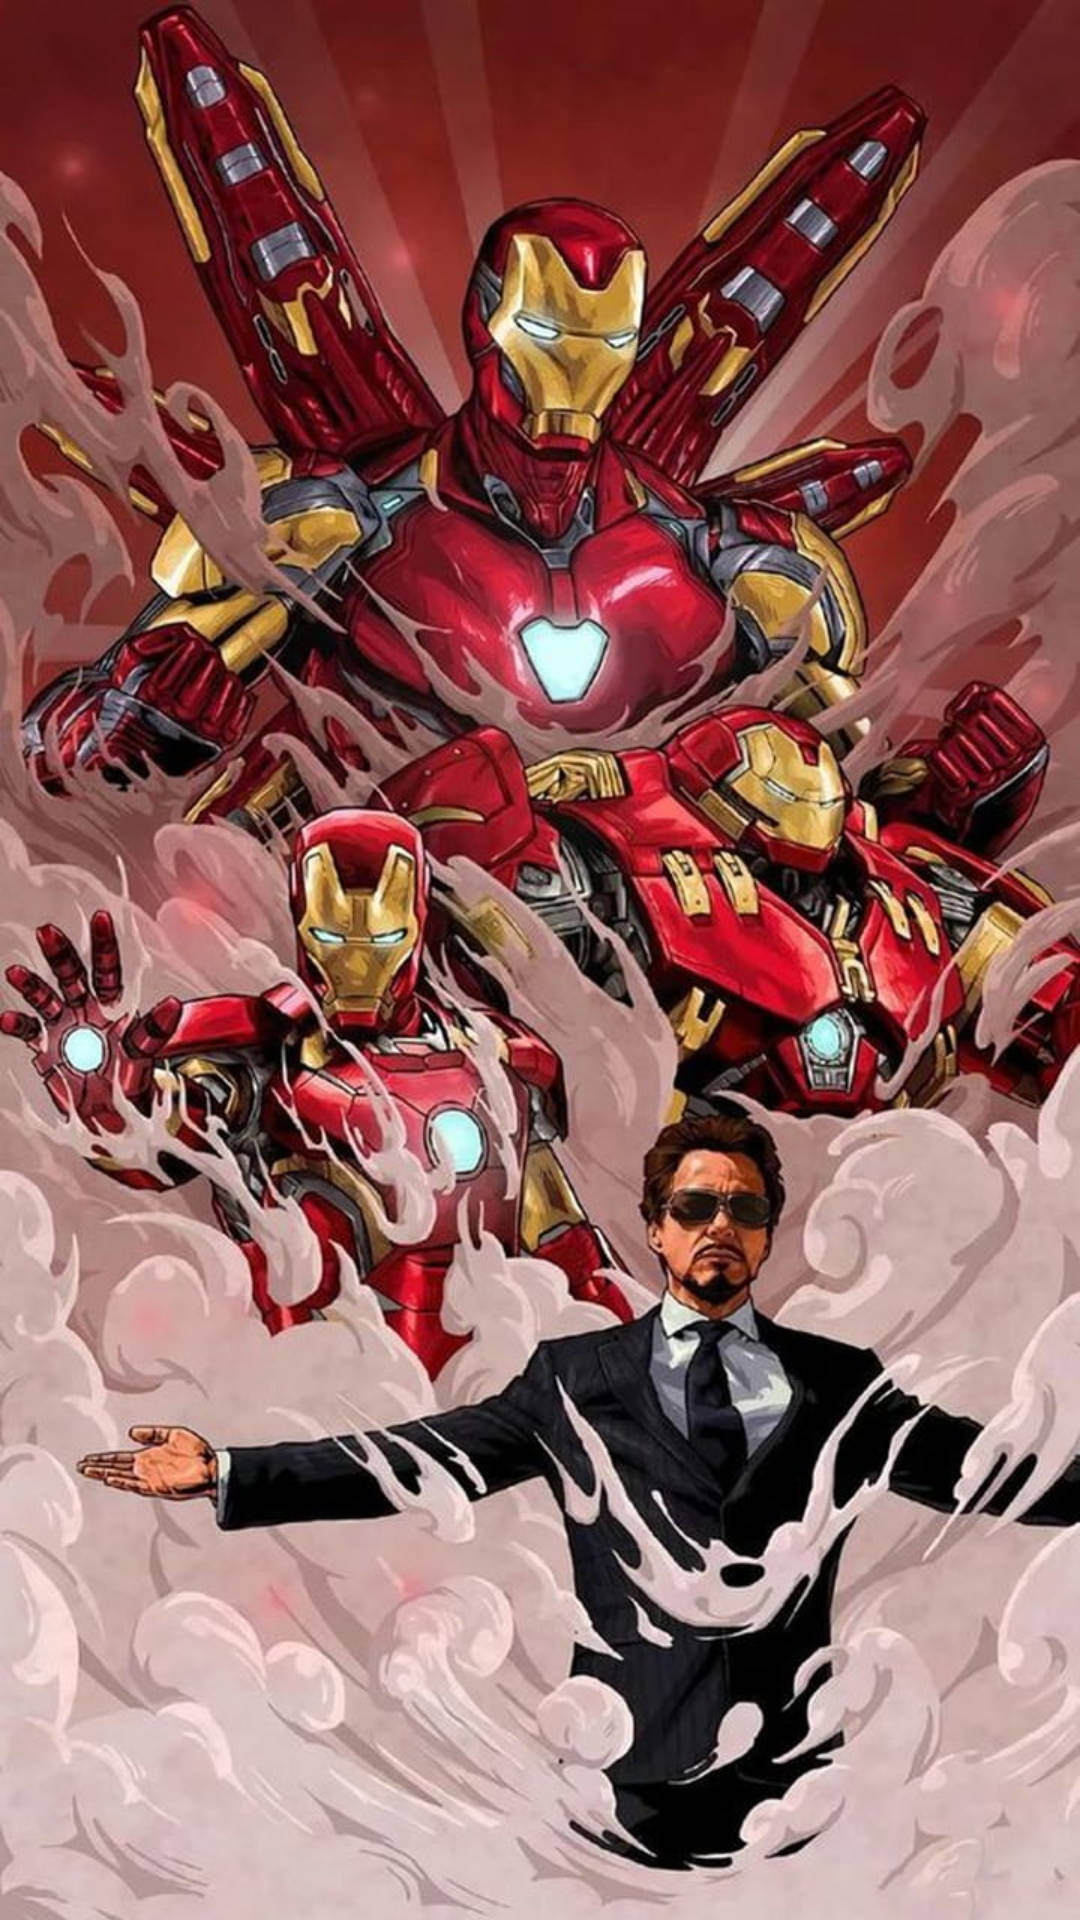 Iron Man The Avengers IPhone Wallpaper  IPhone Wallpapers  iPhone  Wallpapers